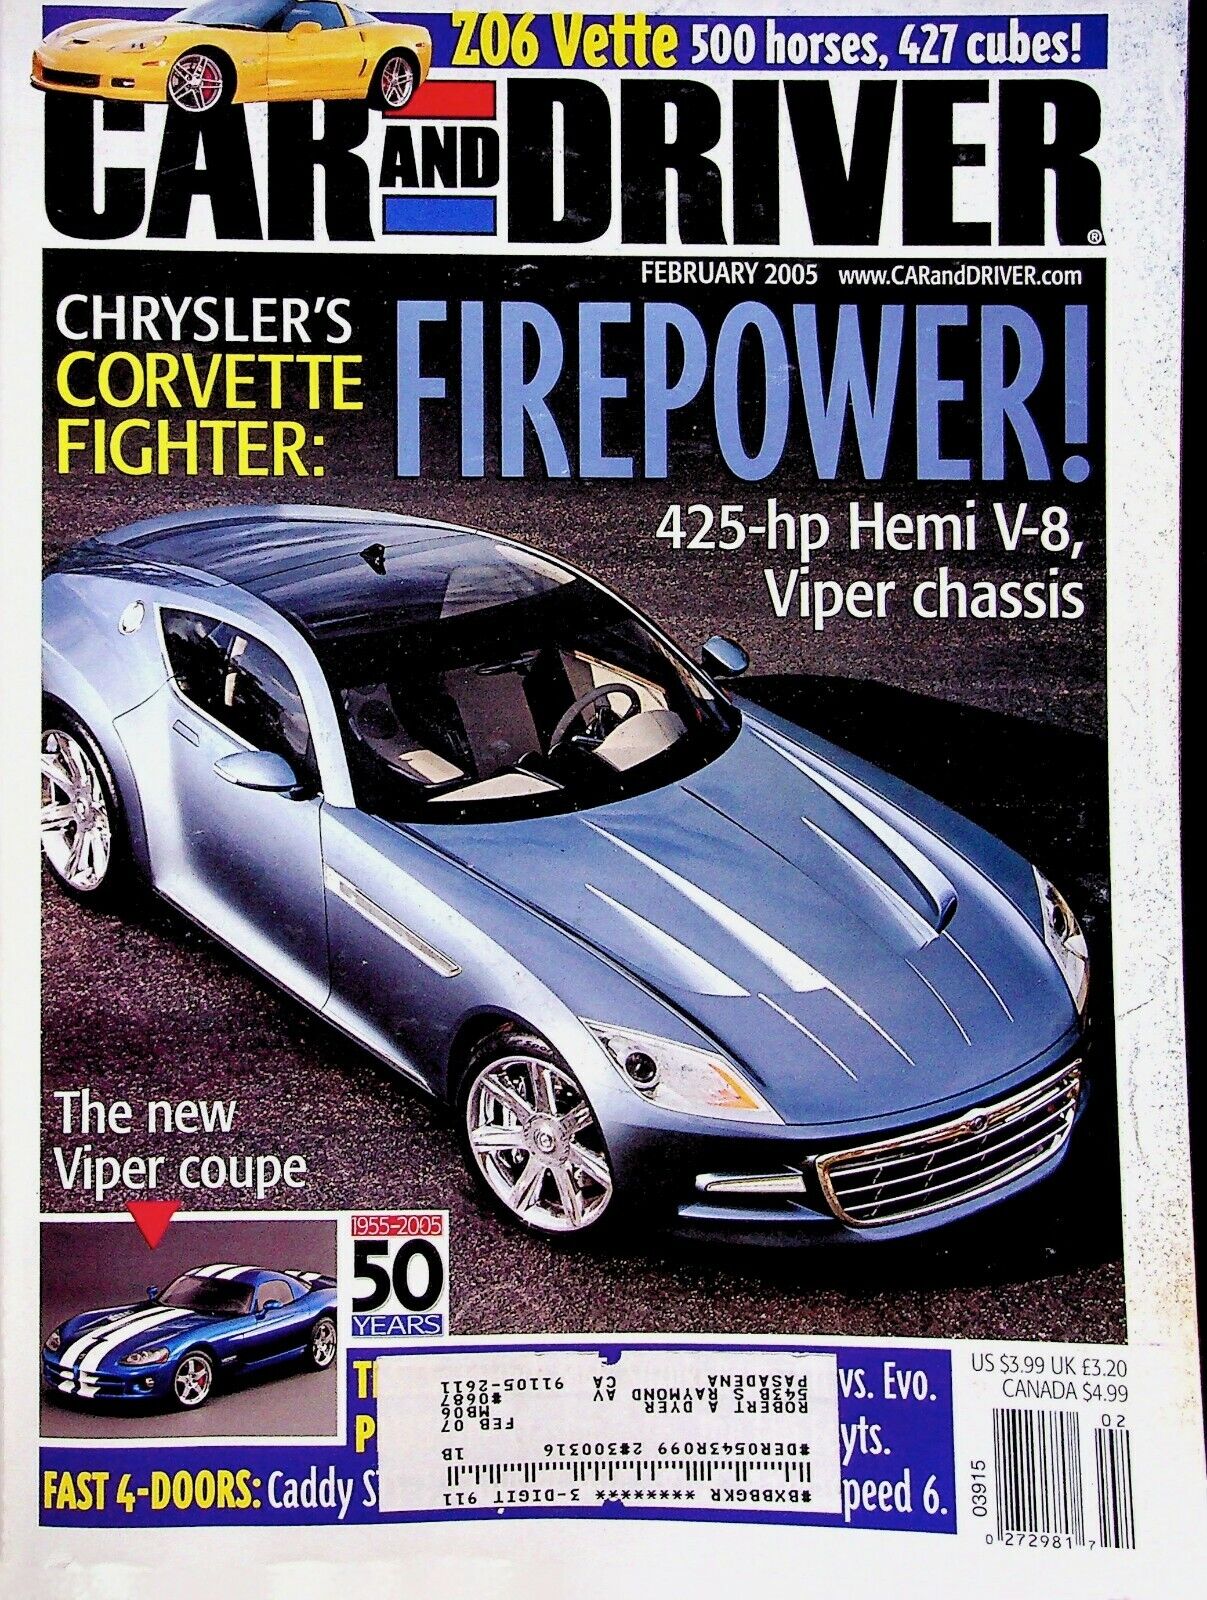 CHRYSLER FIREPOWER - CAR AND DRIVER MAGAZINE, FEBRUARY VOLUME 50, NO.8 2005